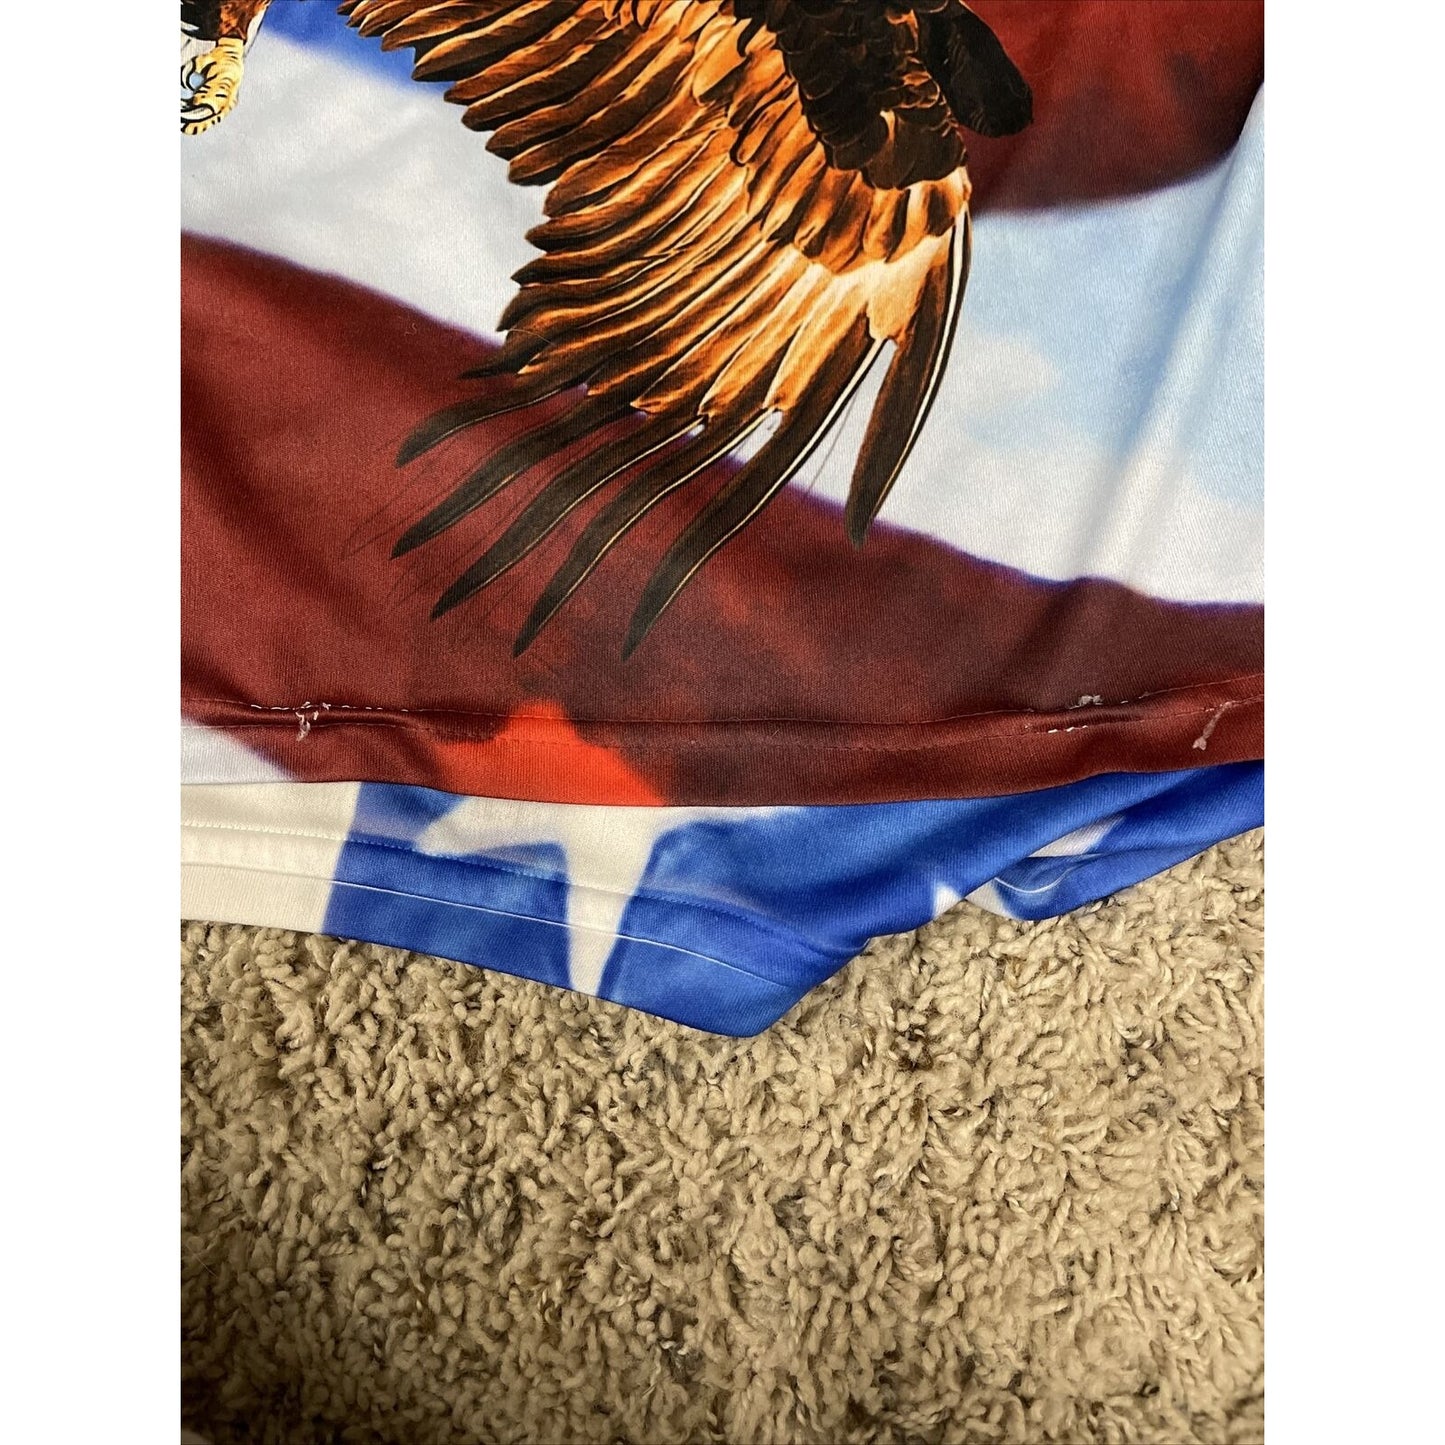 Bald Eagle Cotton Traders Sport Large Patriotic USA Shirt